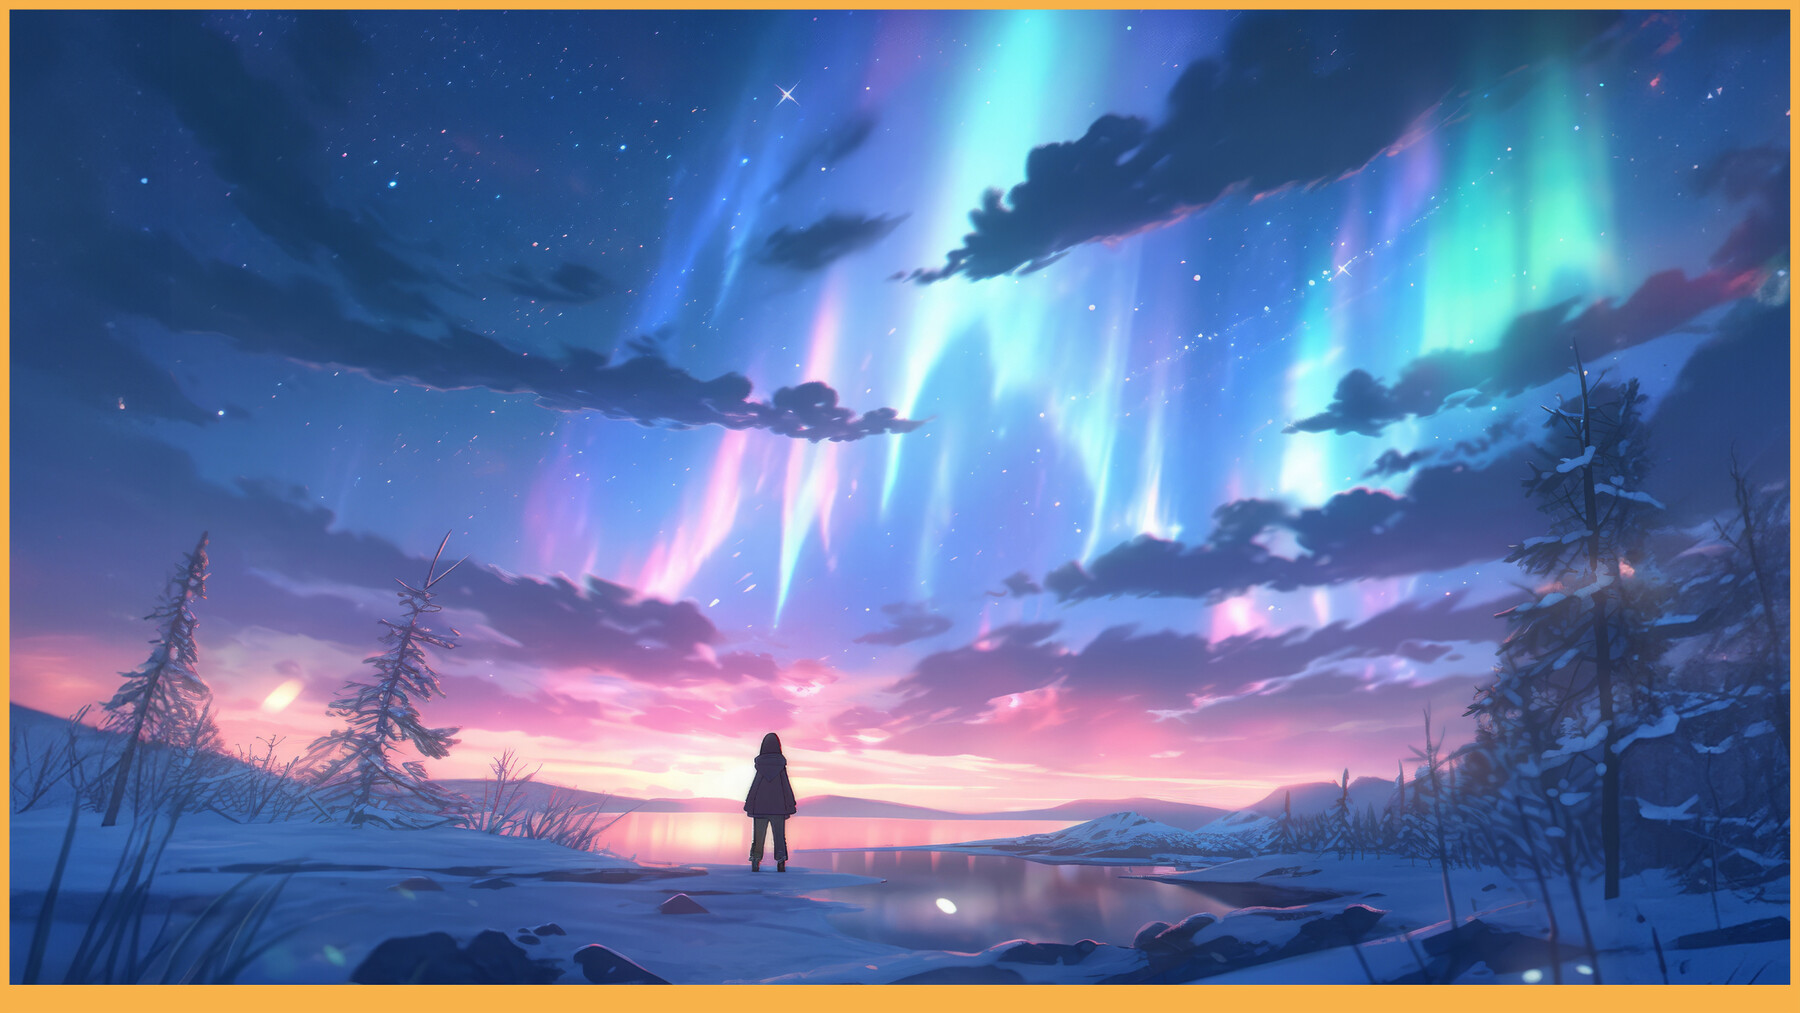 ArtStation - 202 Anime Magical Aurora Borealis | Artworks